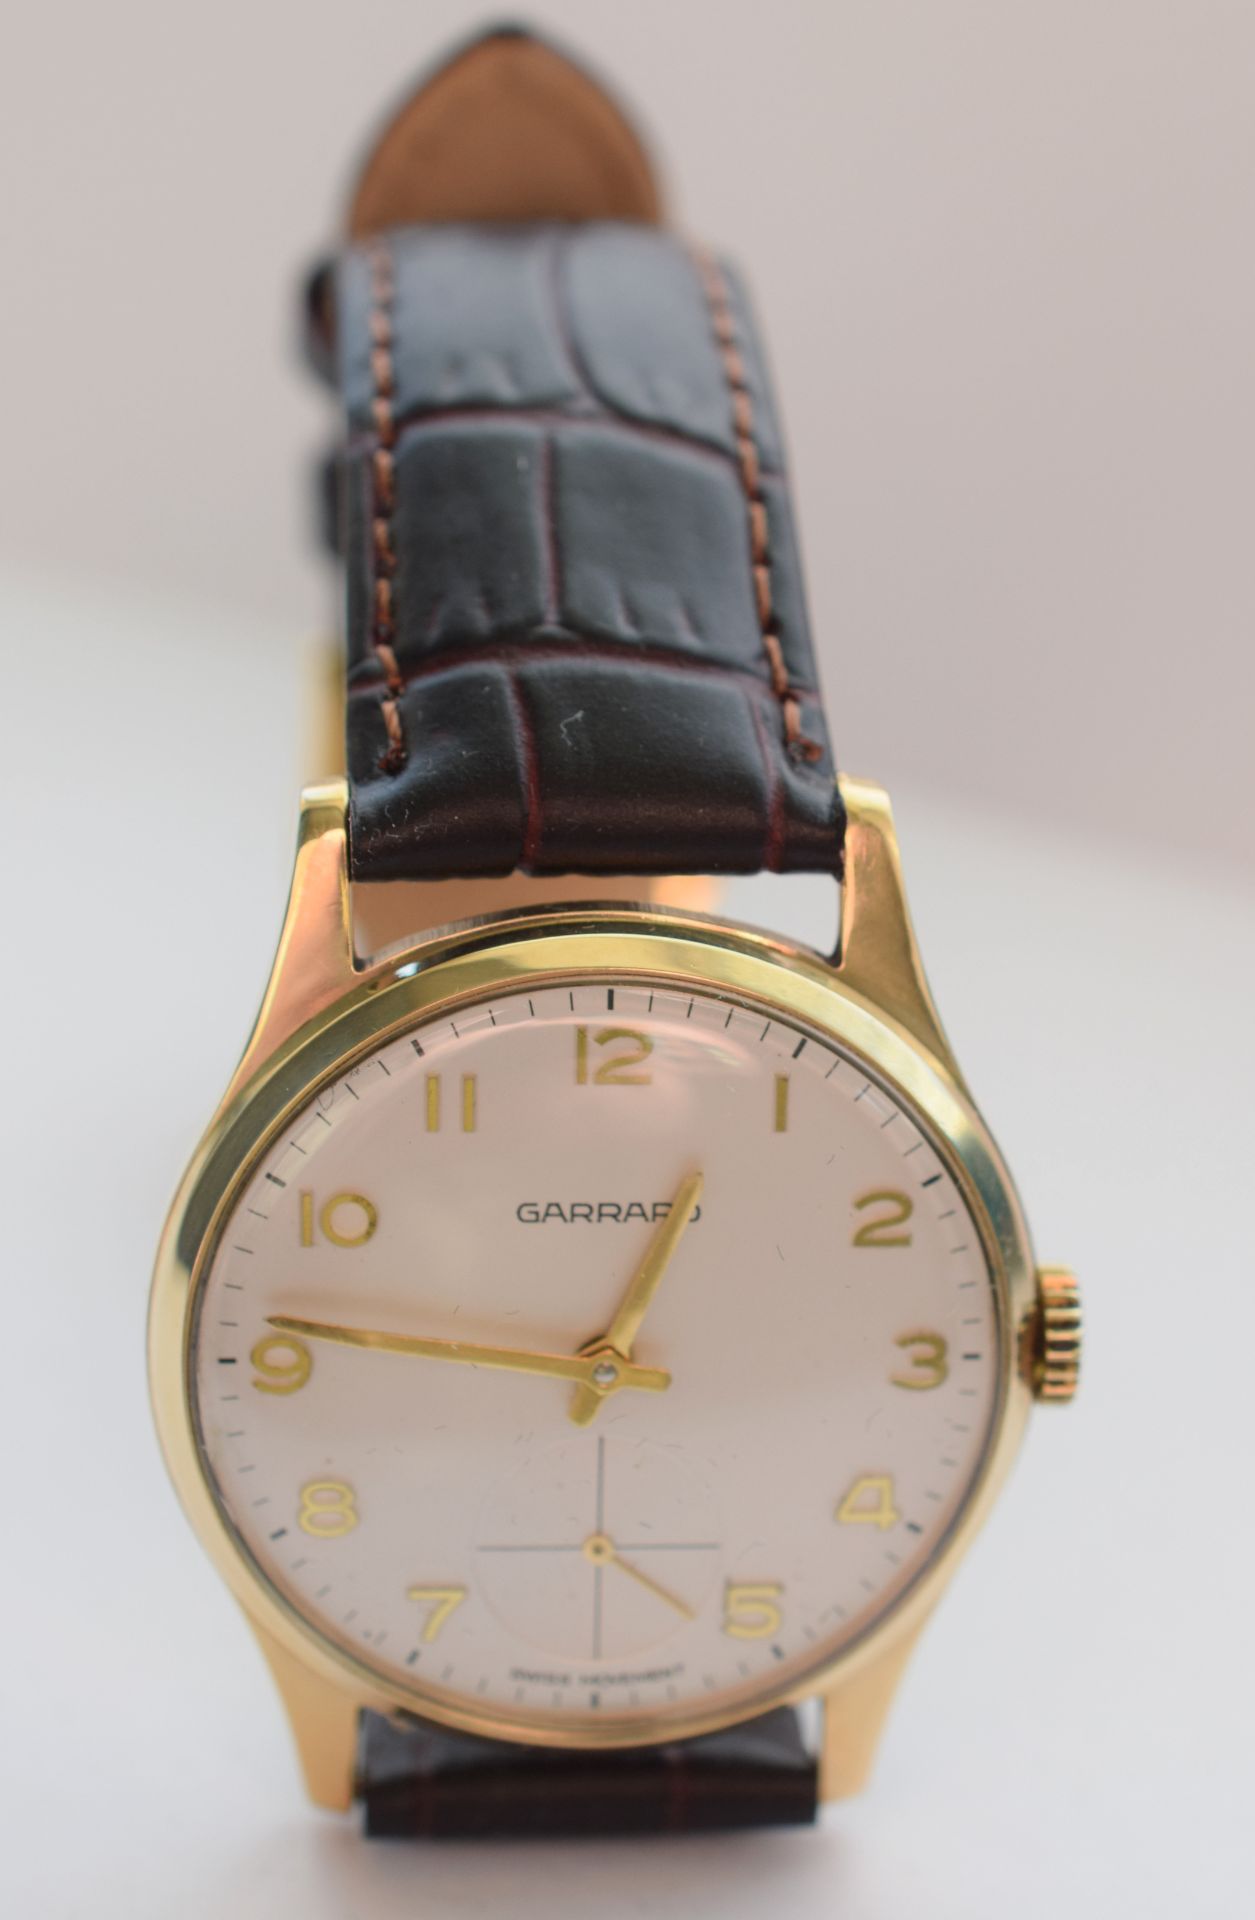 9ct Solid Gold Garrard Gentleman's Manual Wind Watch